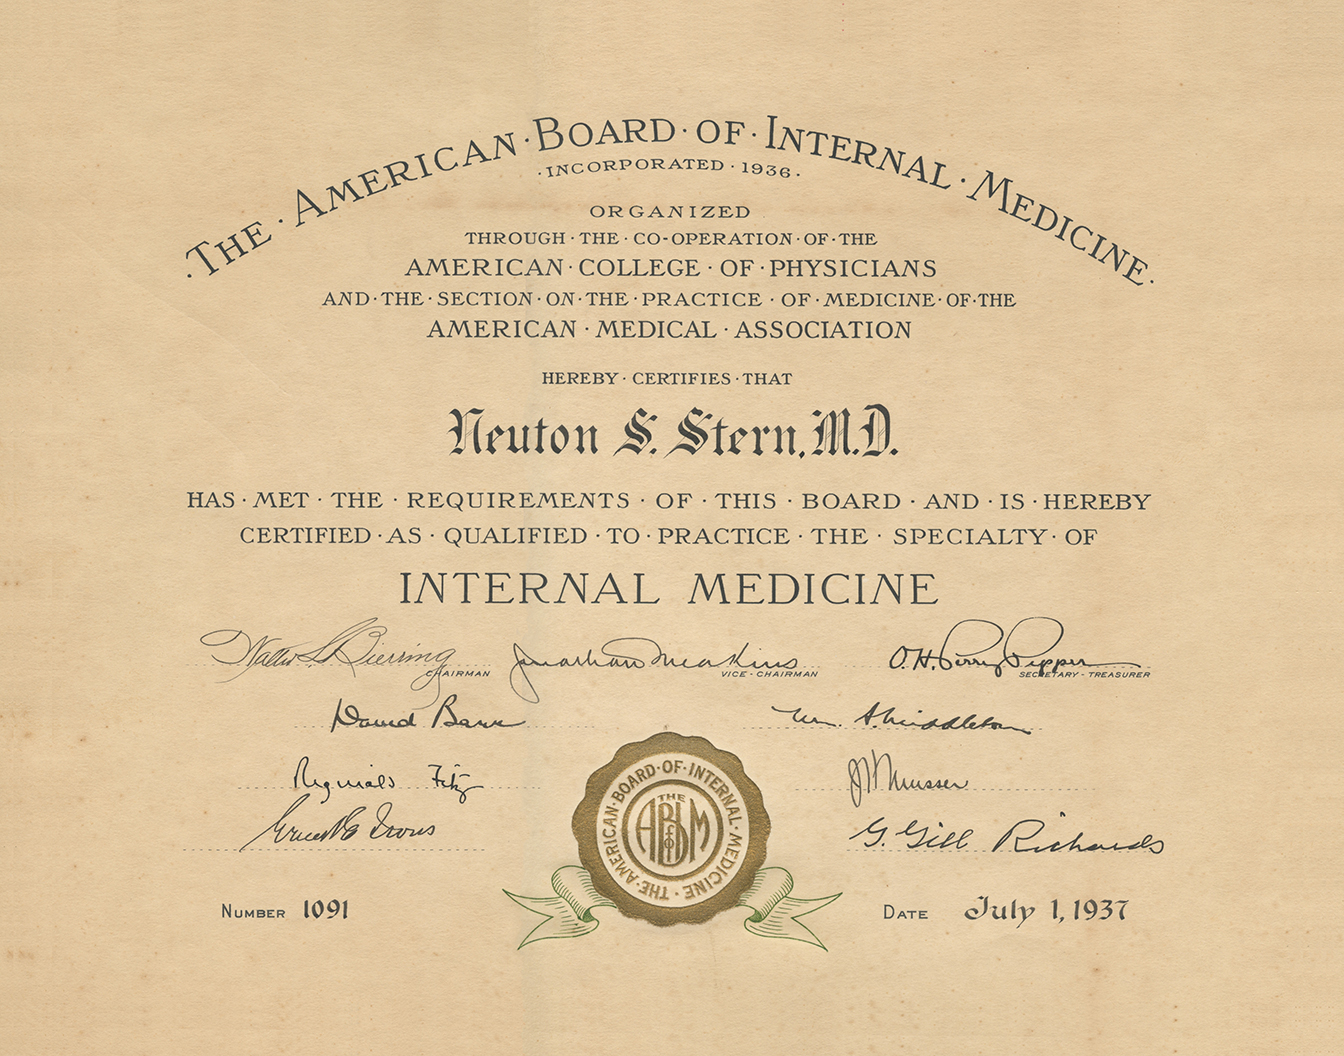 The very first ABIM Certificate